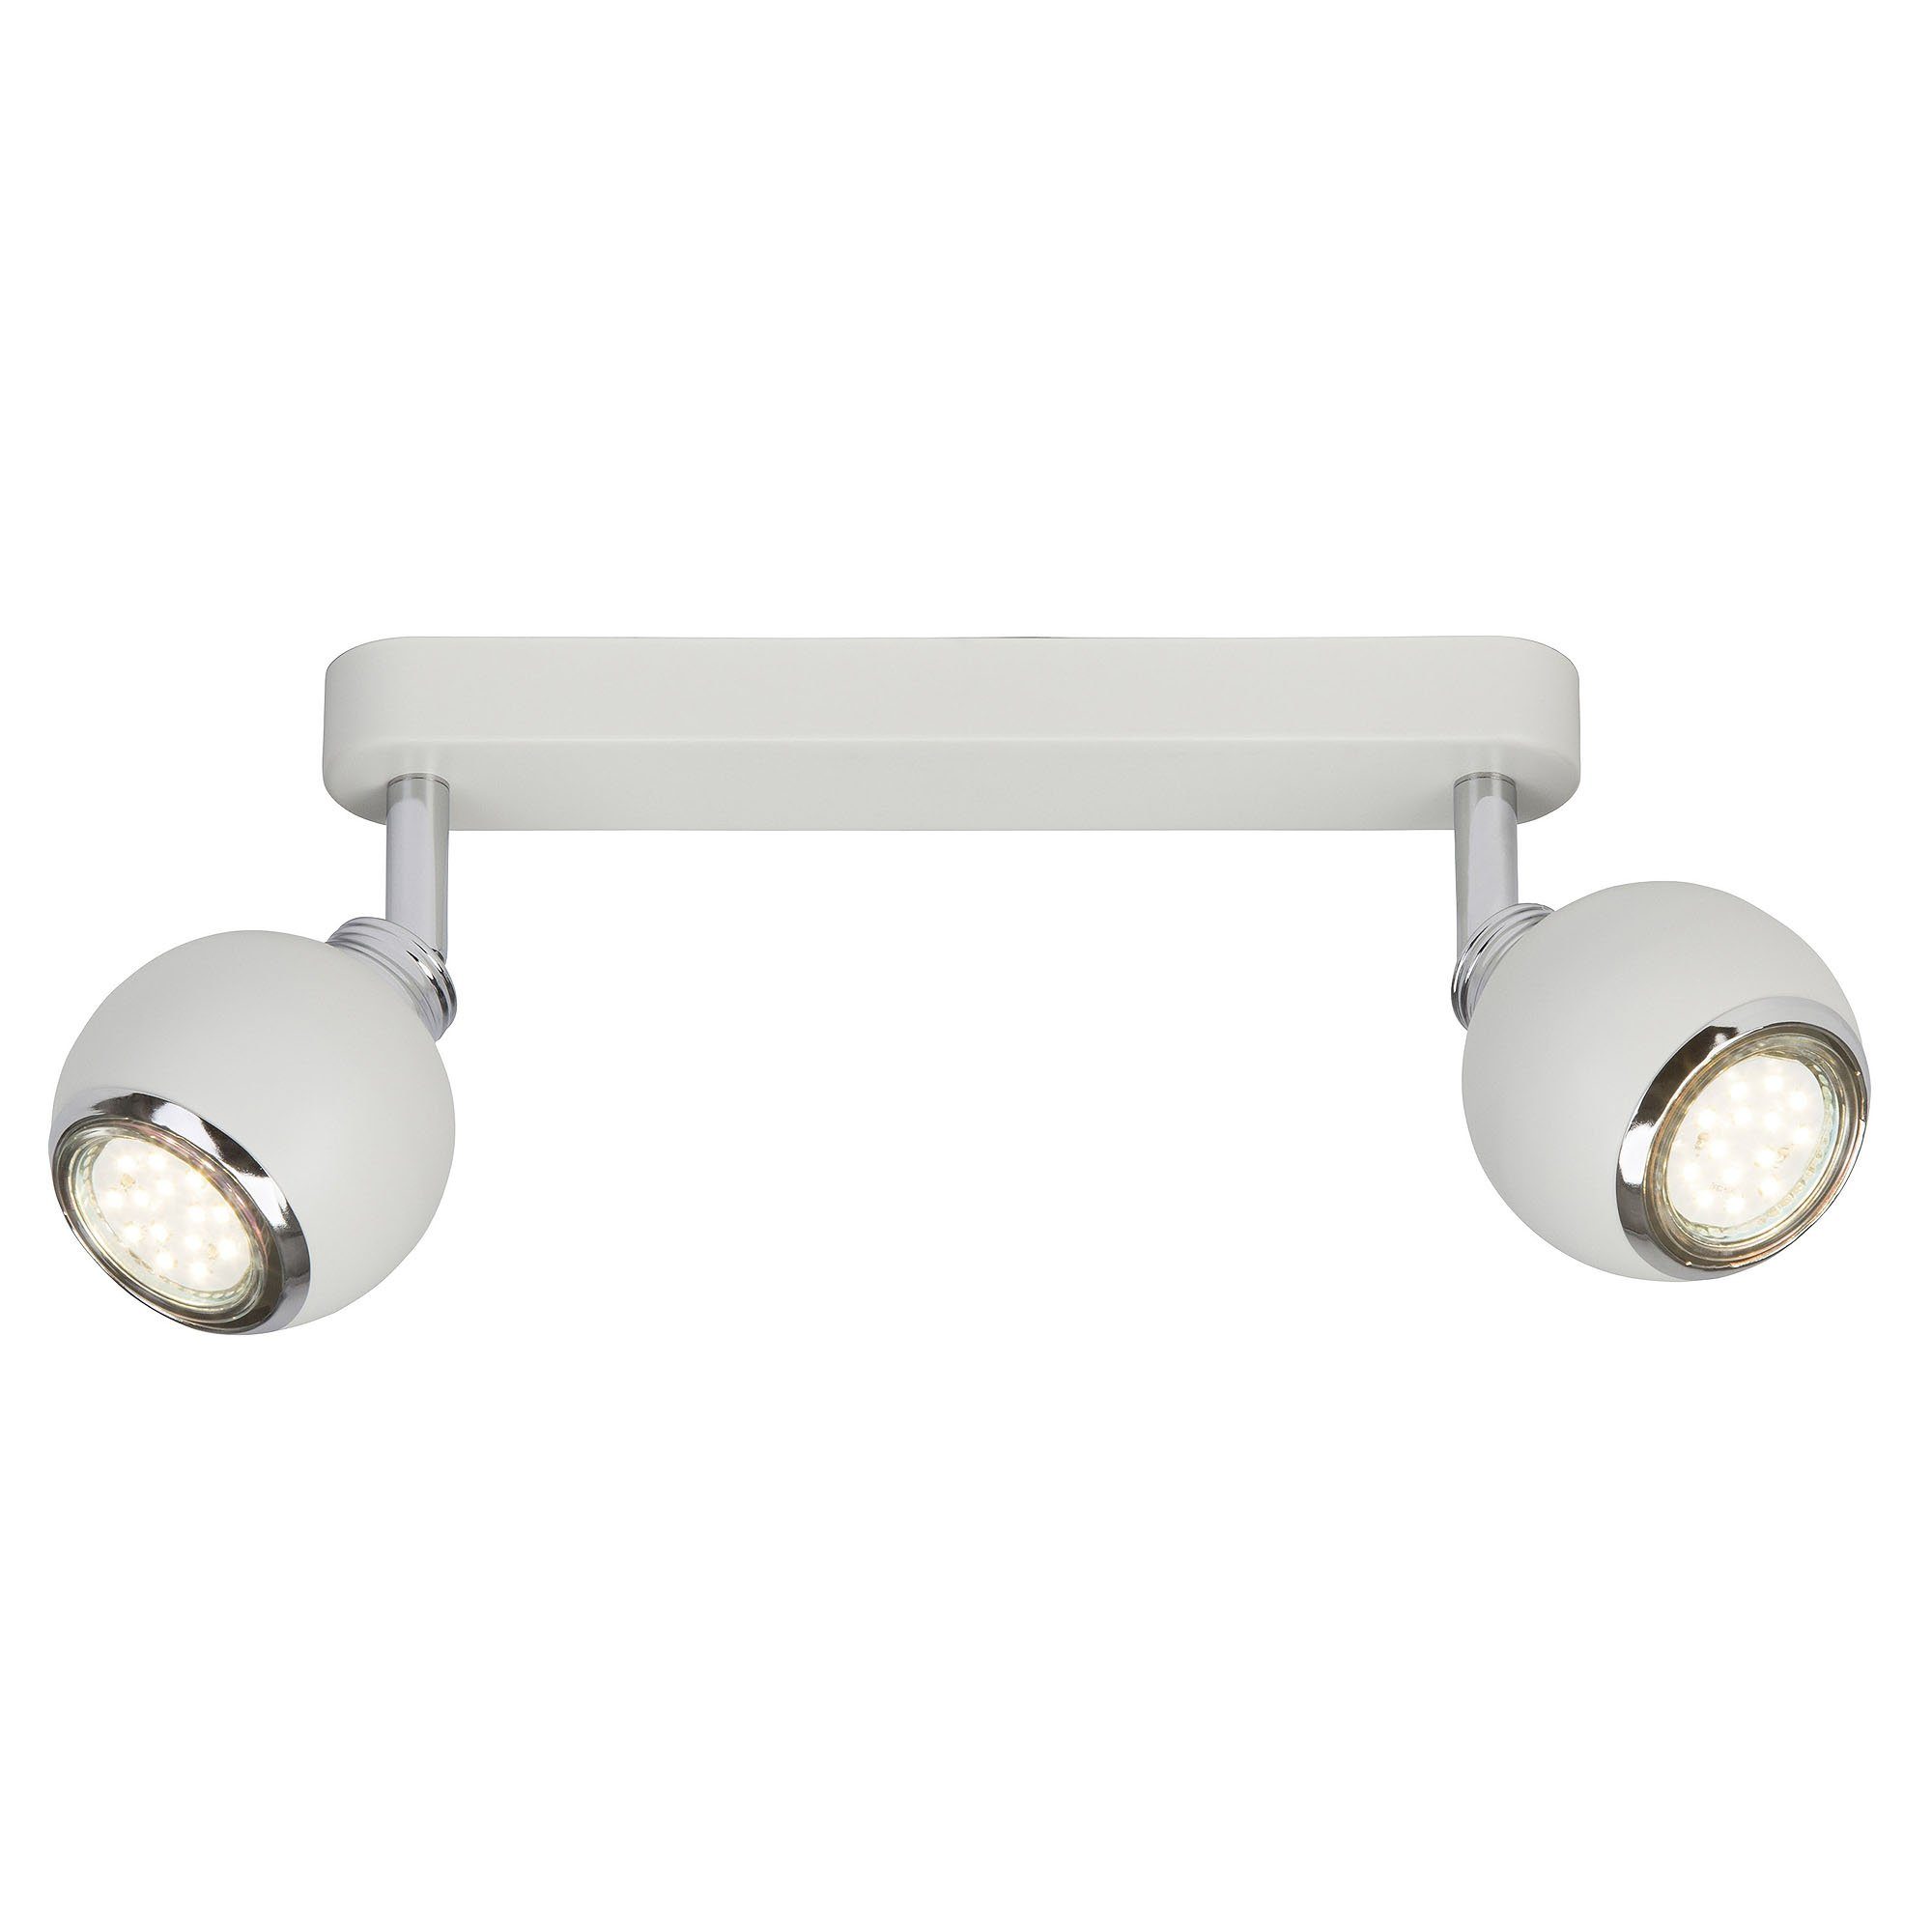 -PAR51, LED Spotbalken weiß/chrom Brilliant Deckenleuchte GU10, Ina, 2flg 3W LED Lampe 2x LED- Ina